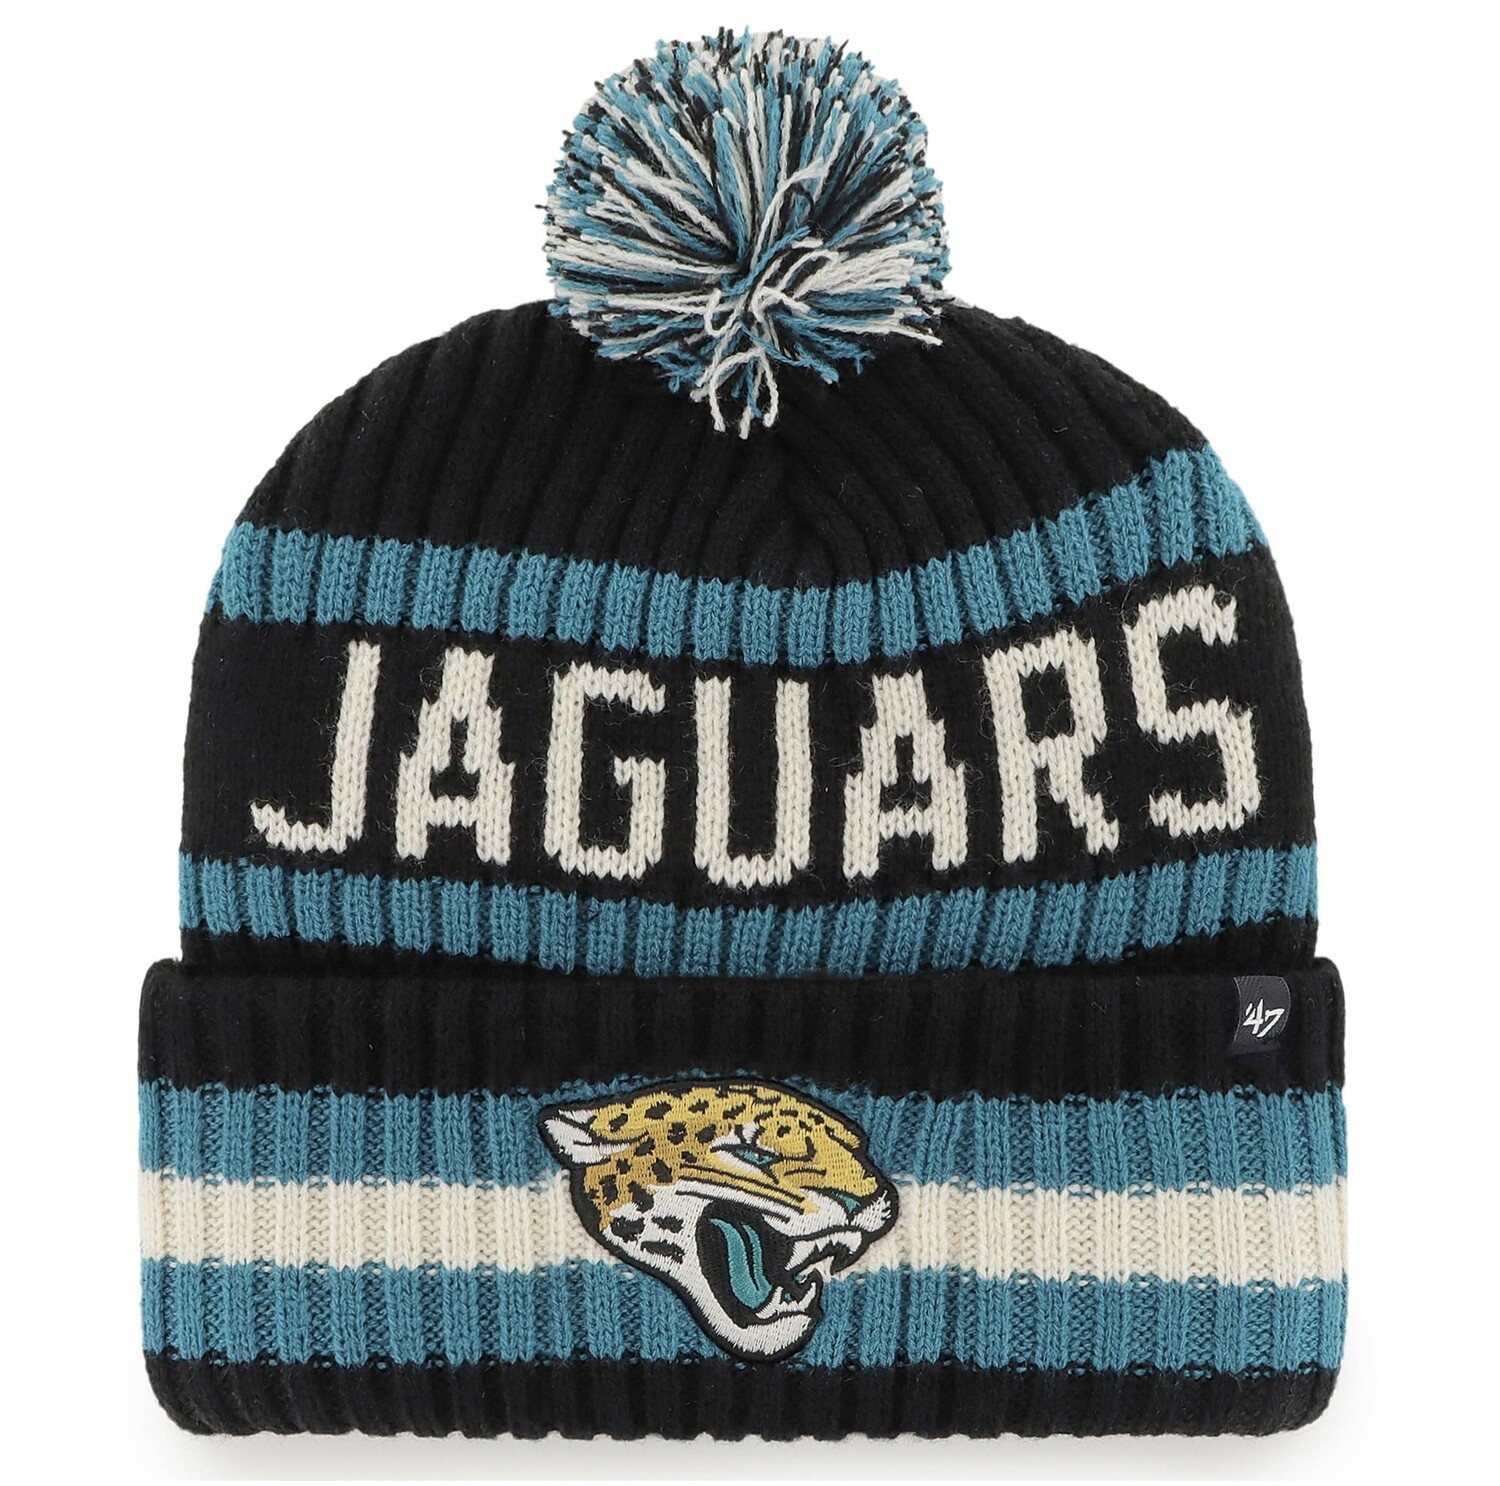 Jacksonville Jaguars 47 Bering Cuffed Pom Knit Hat